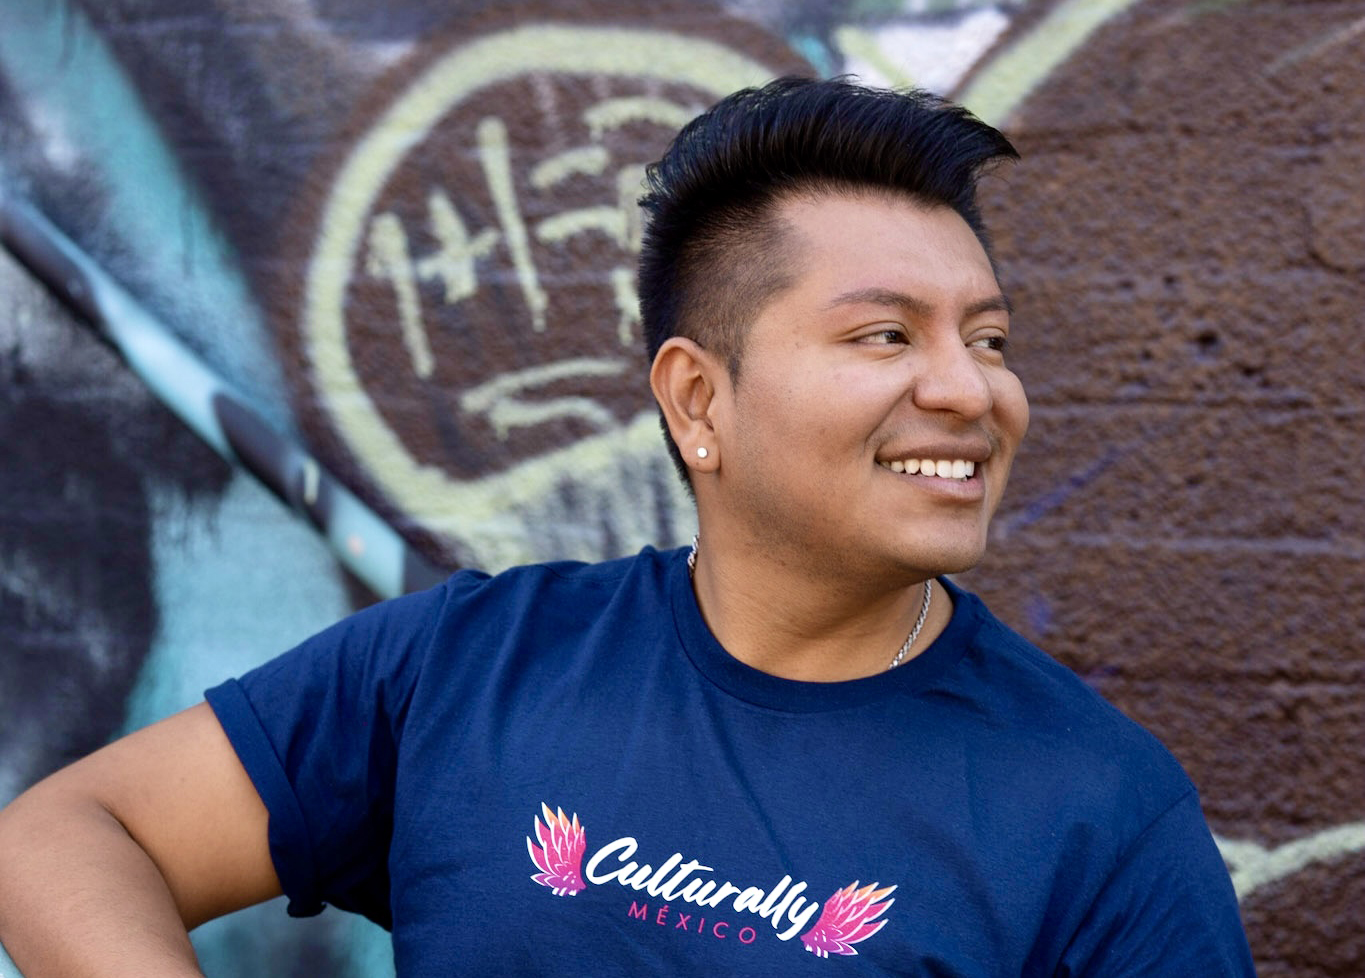 Ray Corona smiles wearing a Culturally Travel T-shirt.